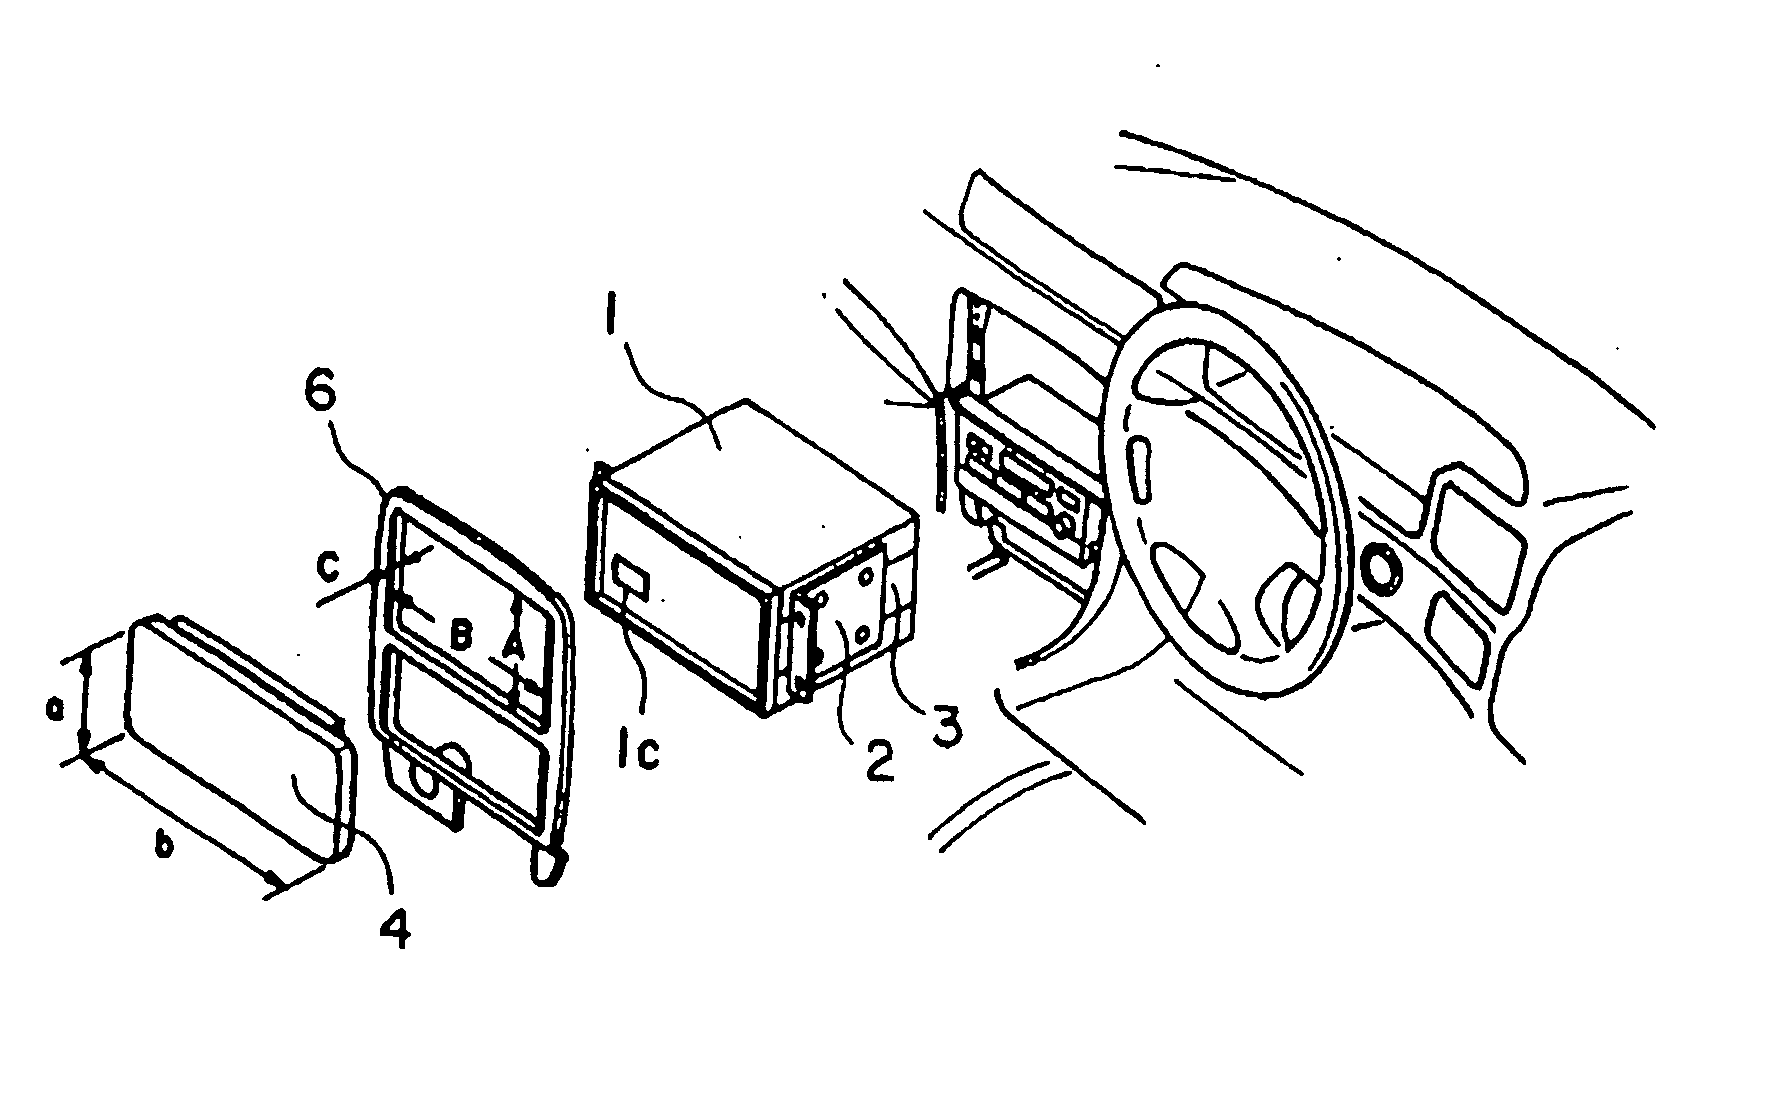 Vehicle-mounted electronic device